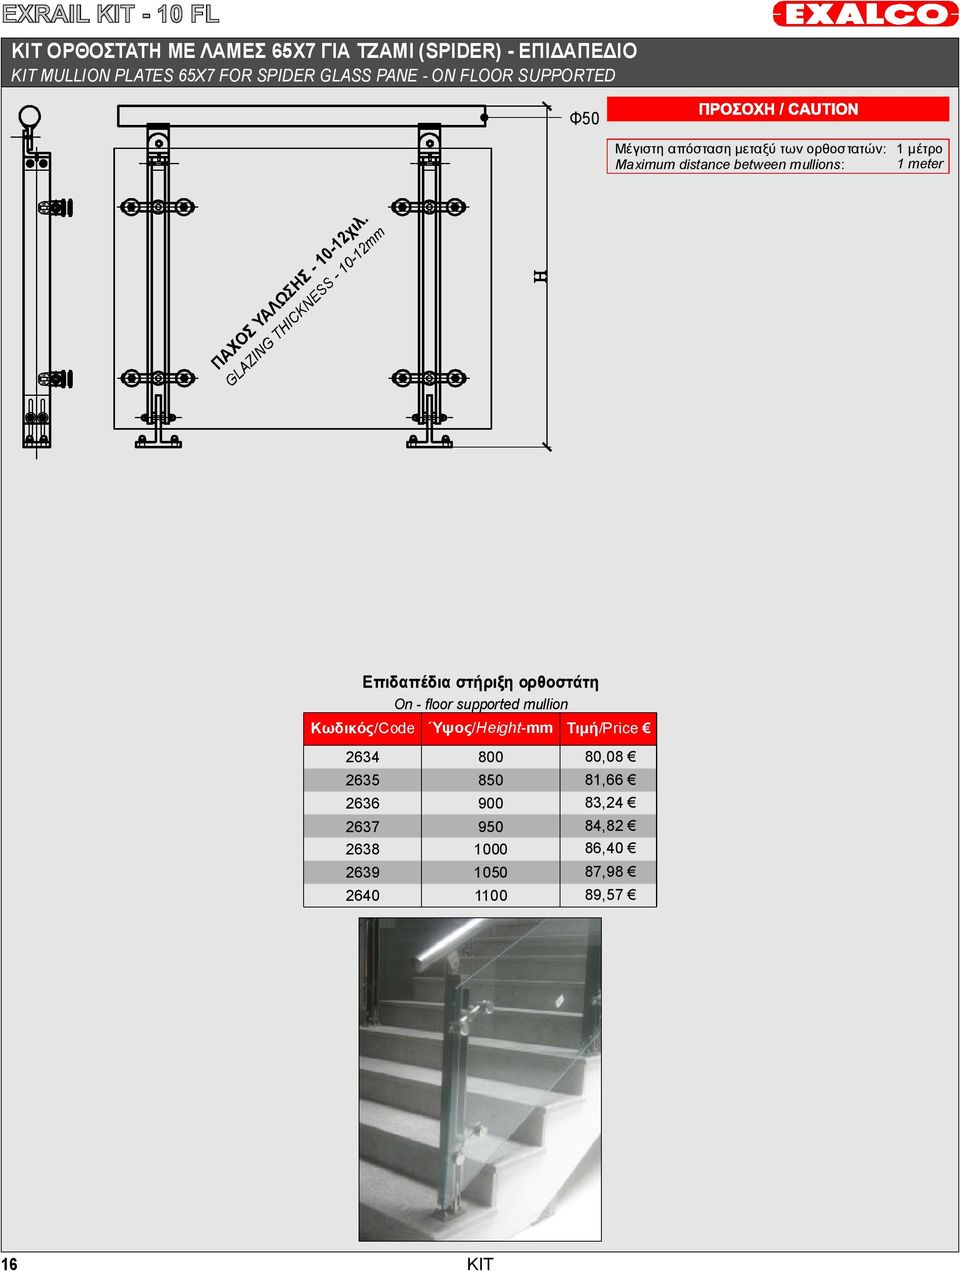 1meter Επιδαπέδια στήριξη ορθοστάτη On -floor supported mullion Κωδικός/Code Ύψος/ Height-mm Τιμή /Price